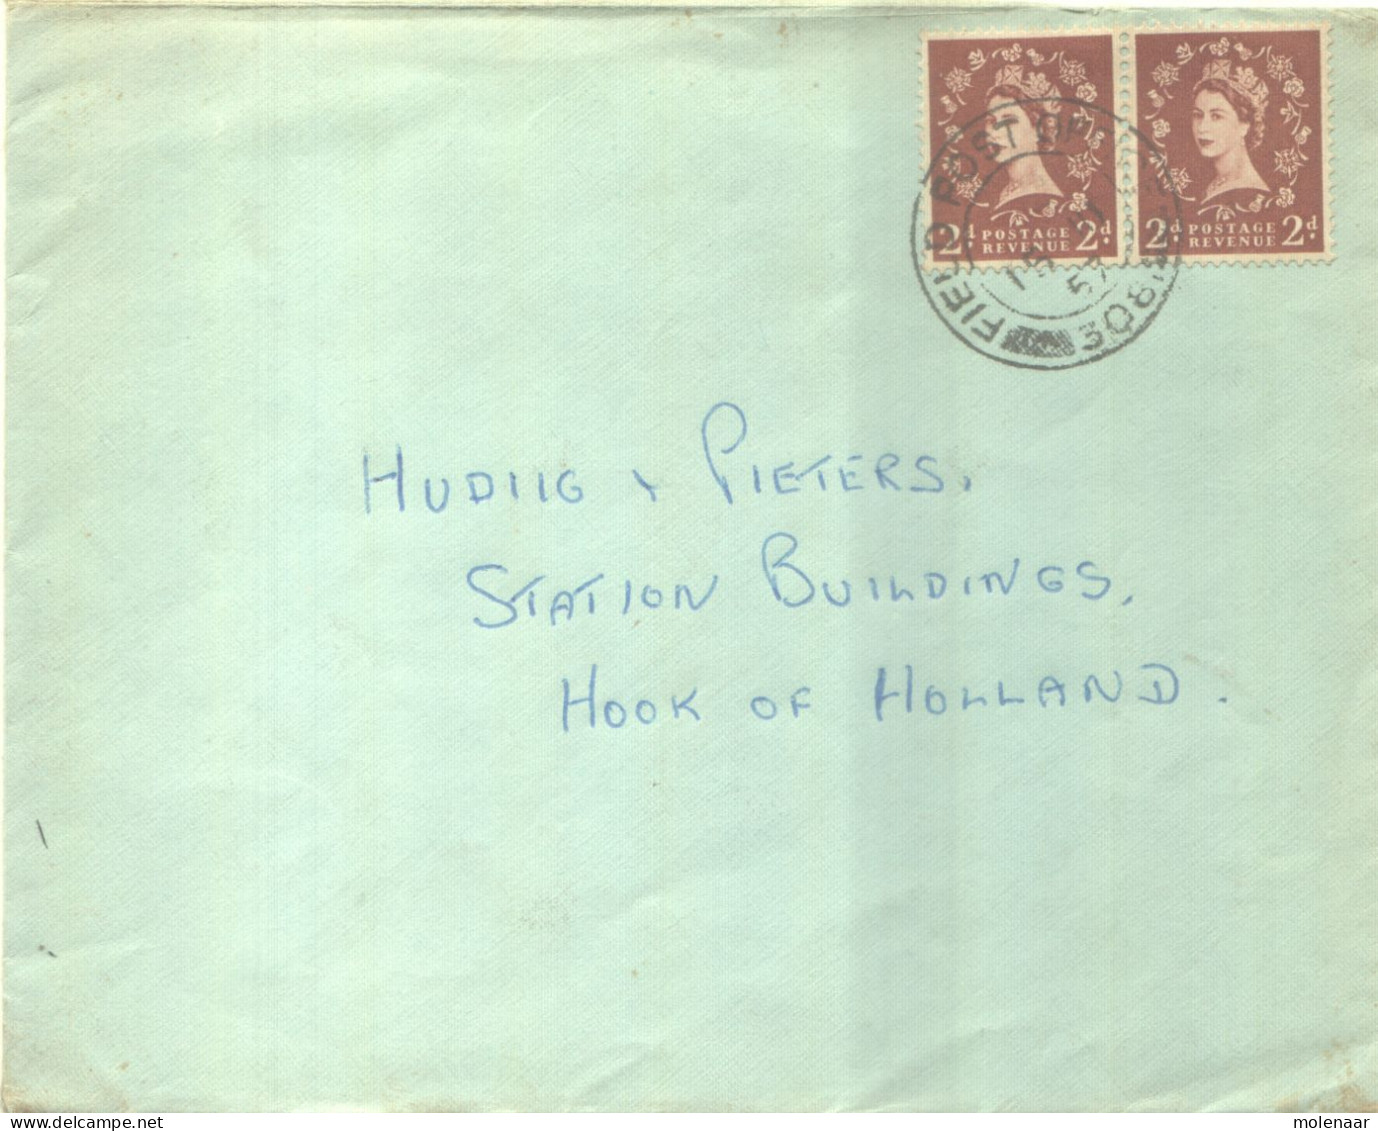 Postzegels > Europa > Groot-Brittannië > 1952-2022 Elizabeth II > 1971-1980  > Brief Met 2 Postzegels (16814) - Storia Postale